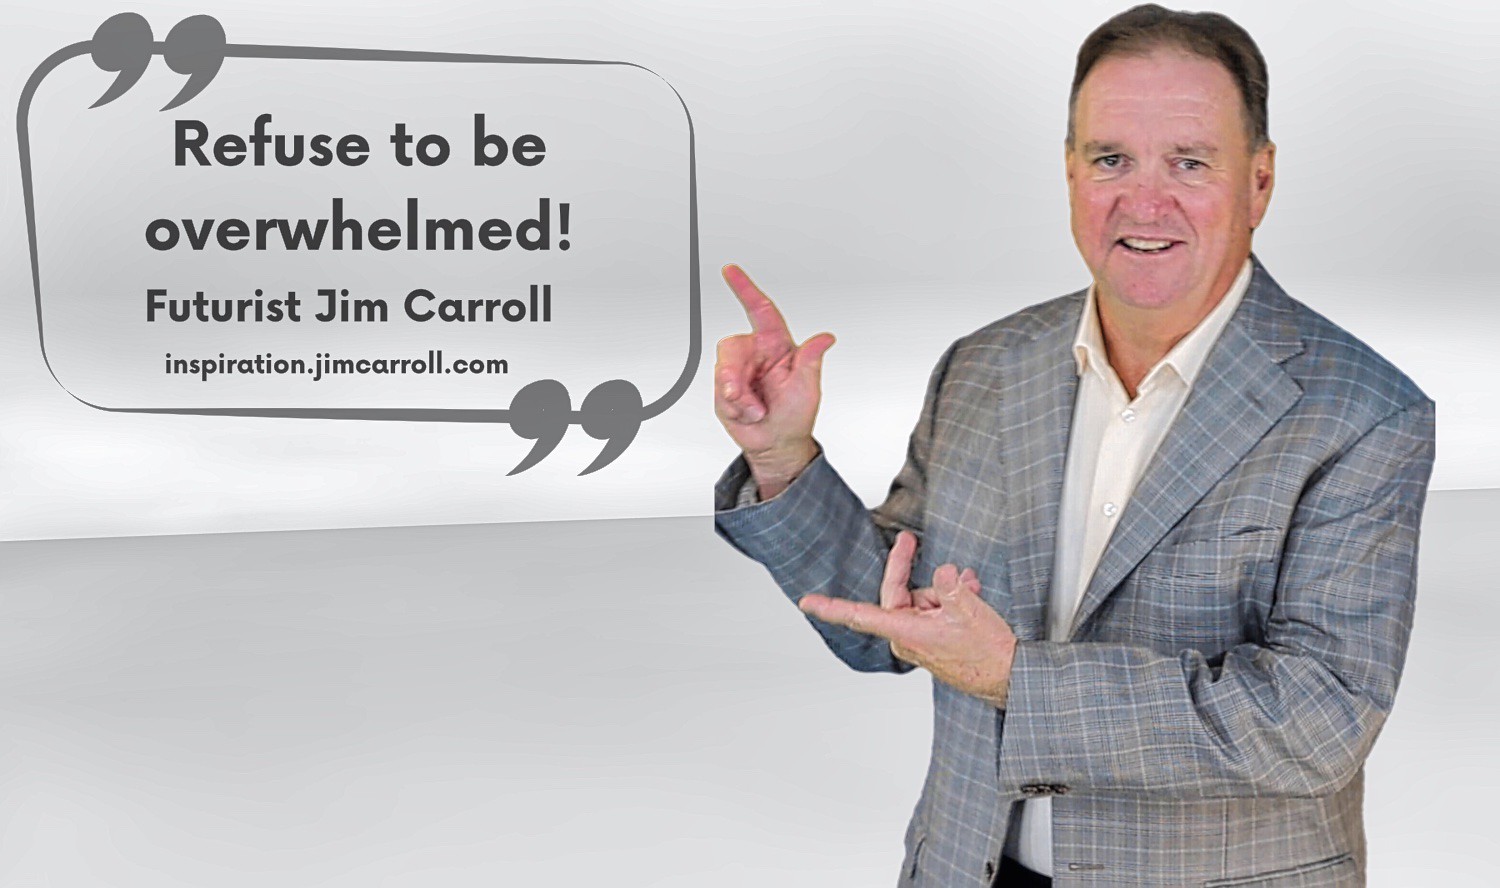 "Refuse to be overwhelmed!" - Futurist Jim Carroll